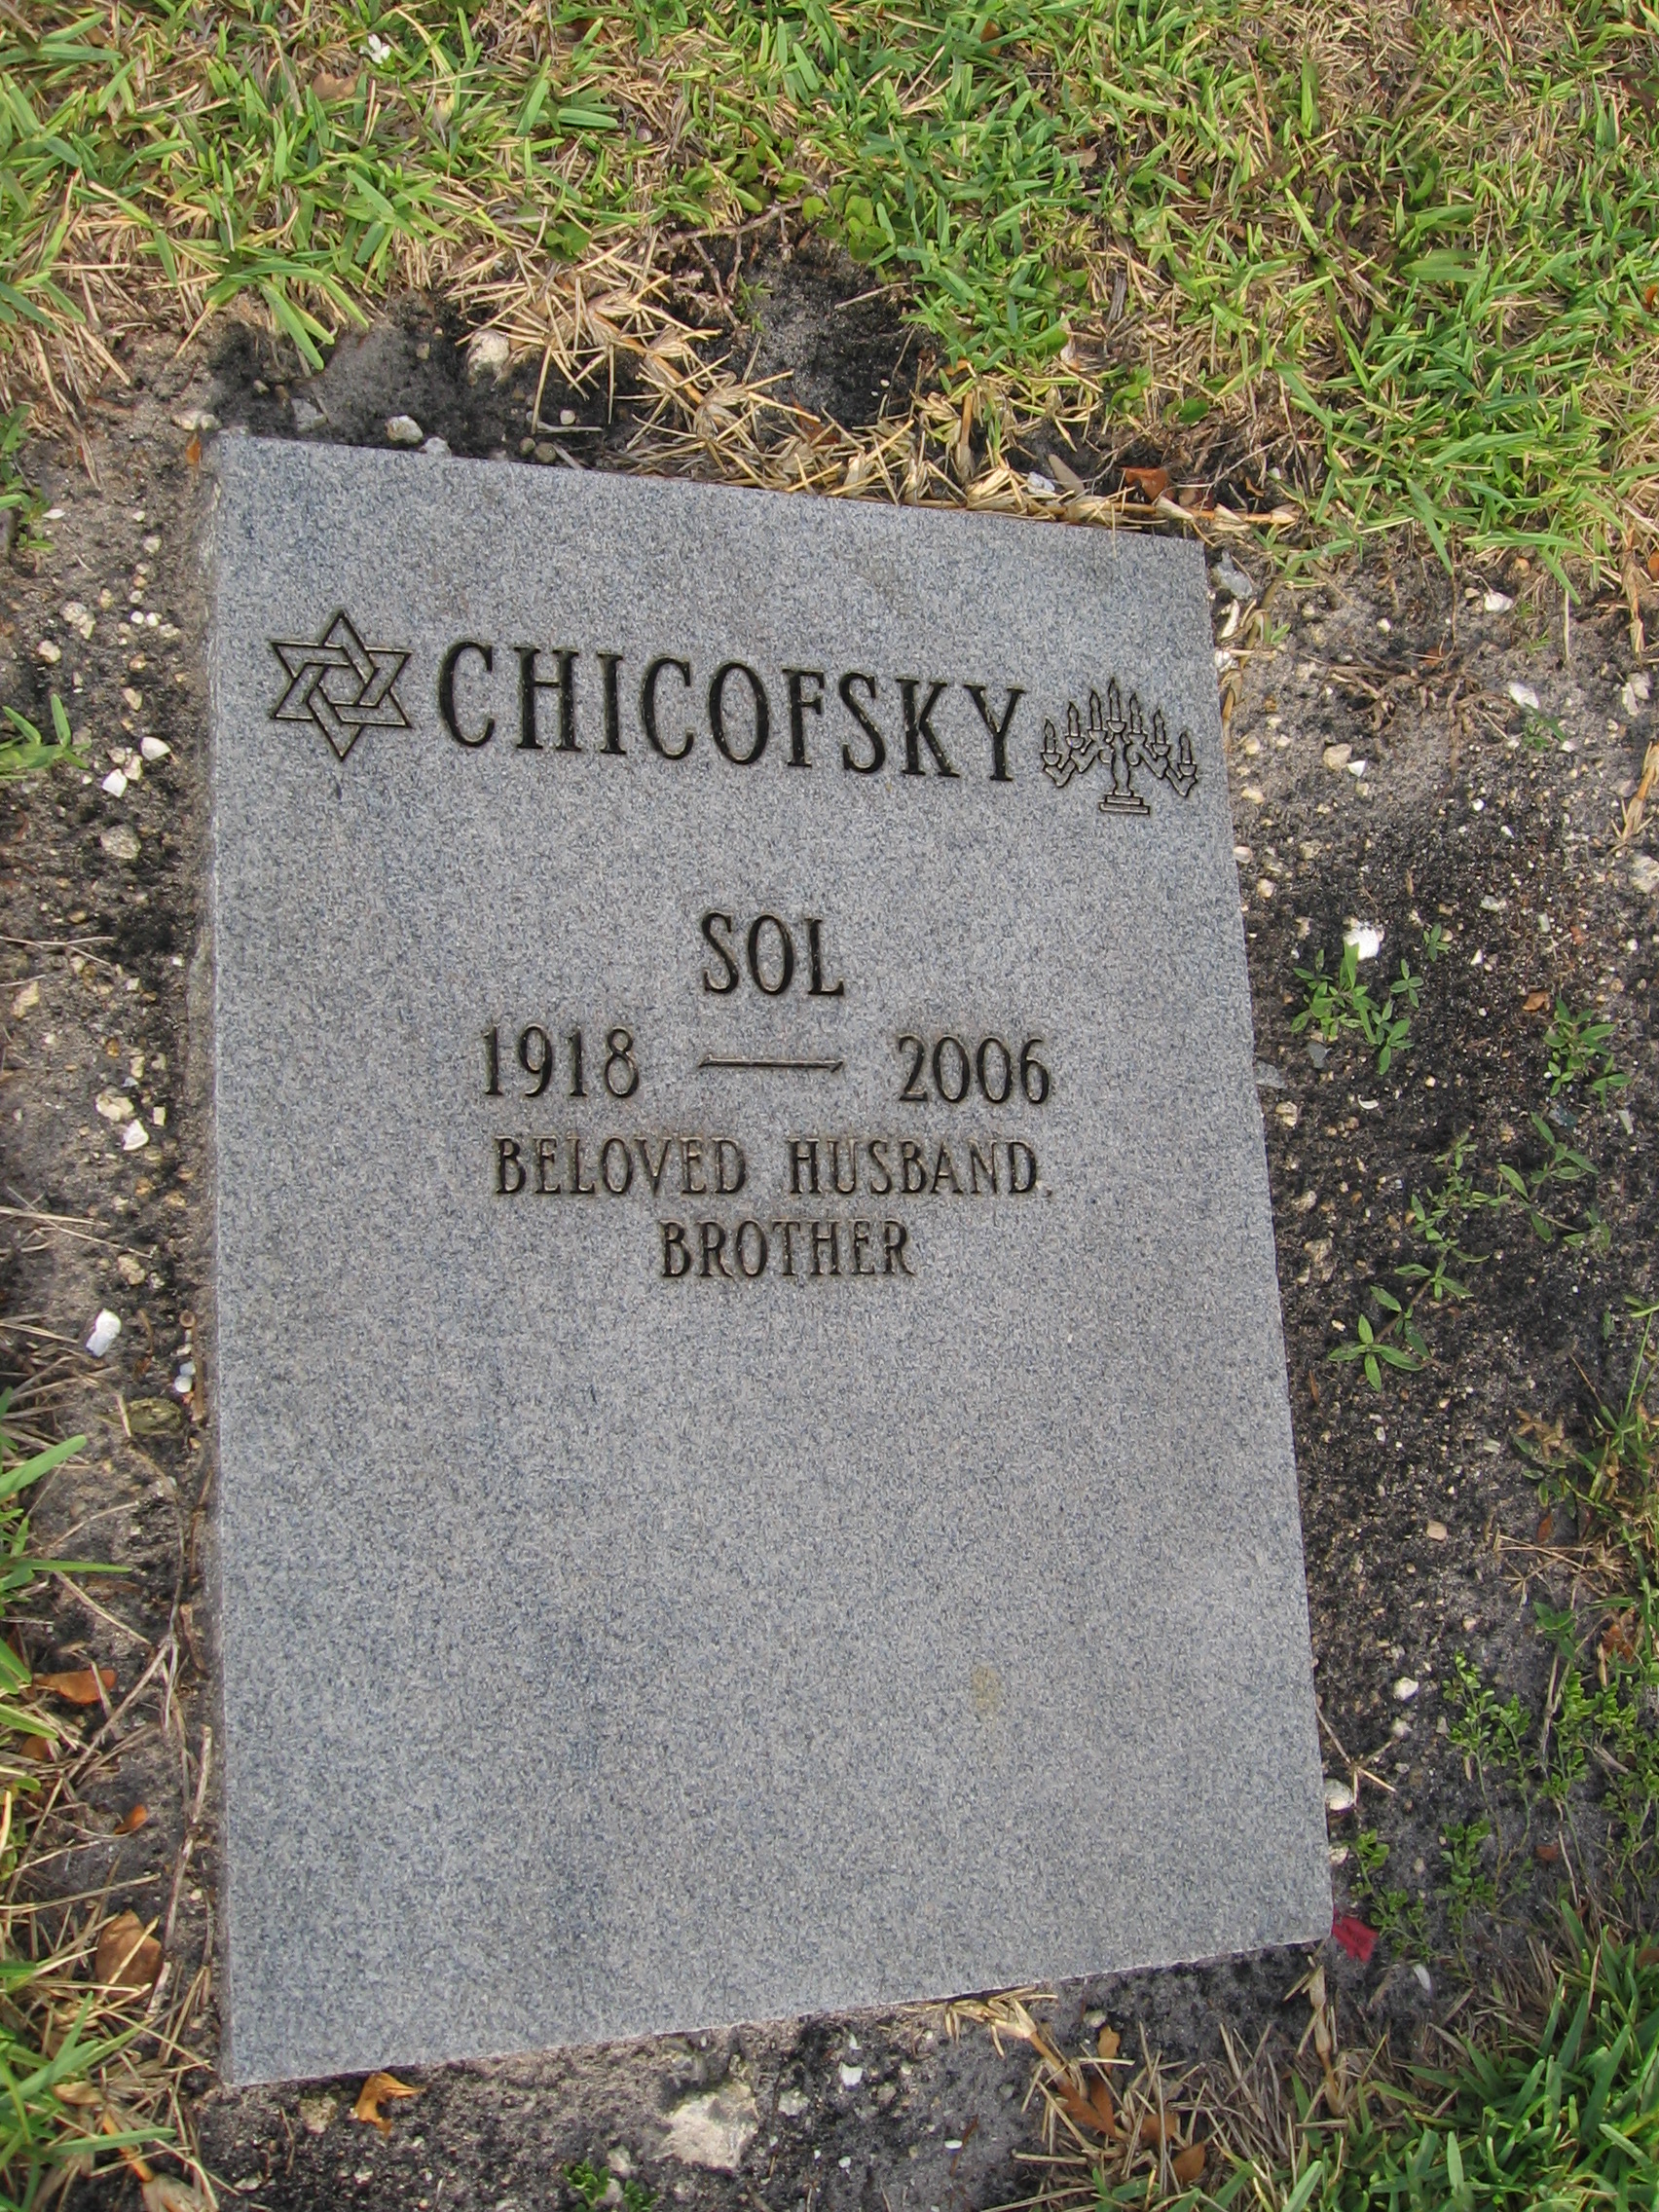 Sol Chicofsky